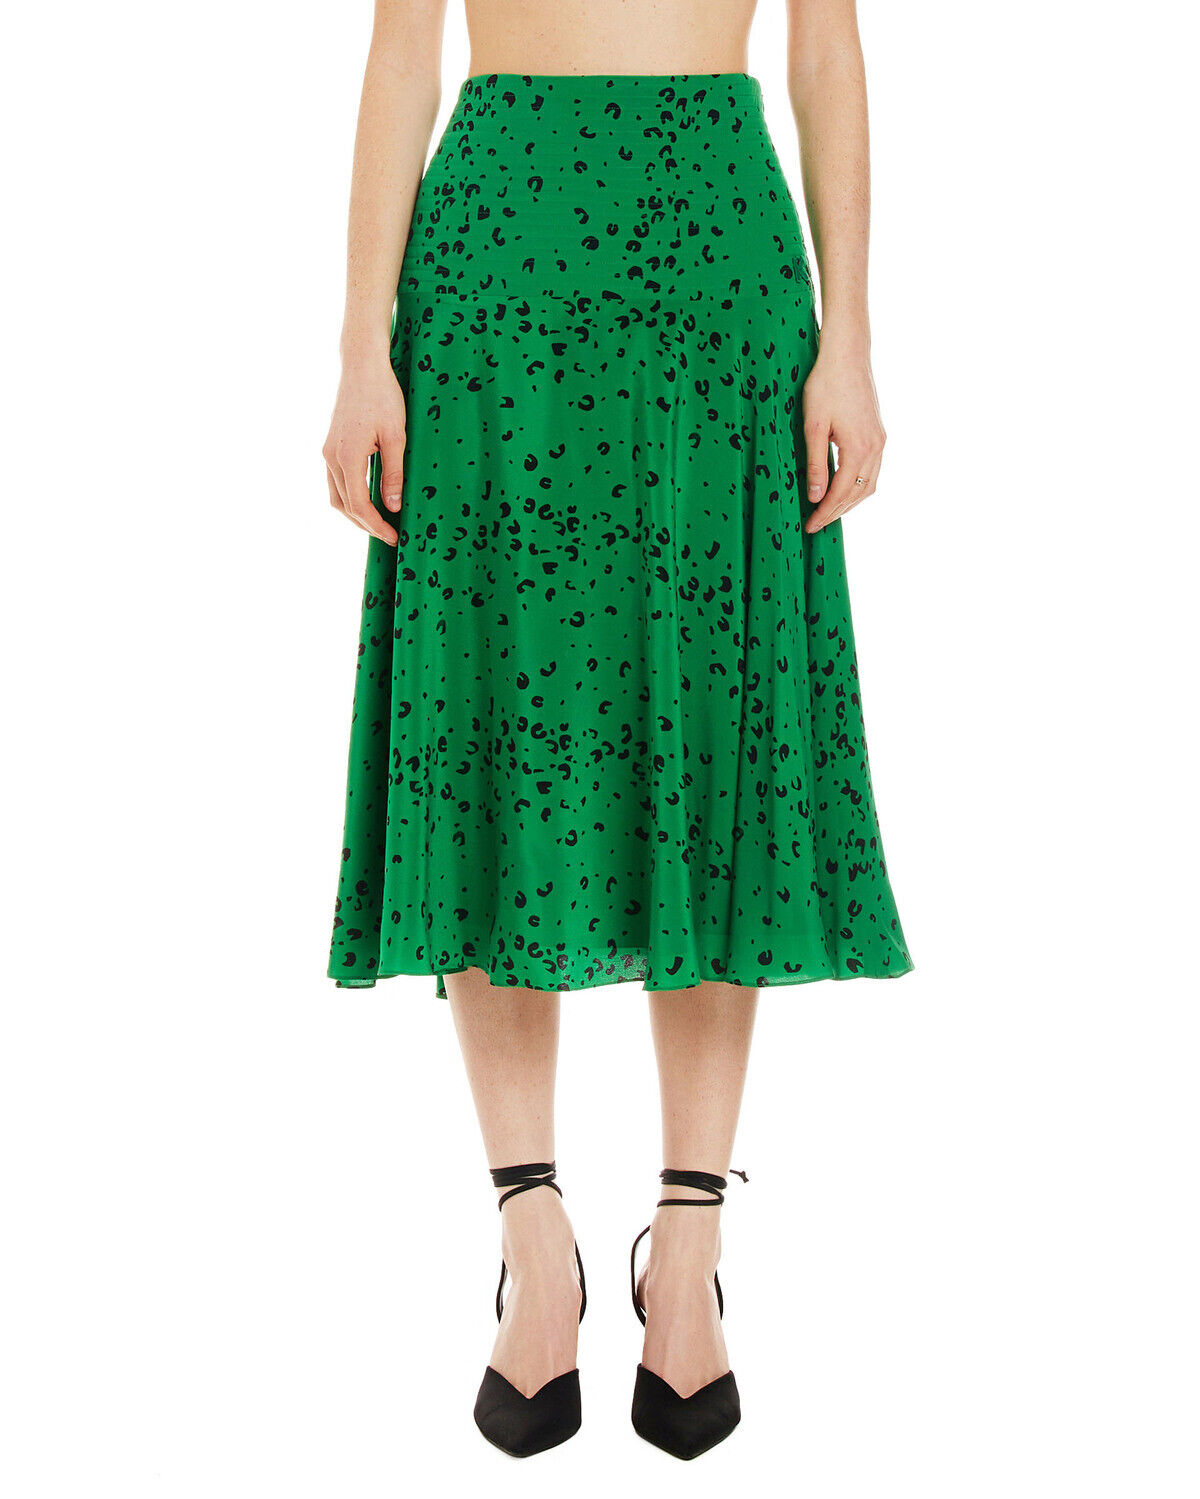 Kenzo Green Small Cheetah Silk Skirt RRP £485.00 BNWT